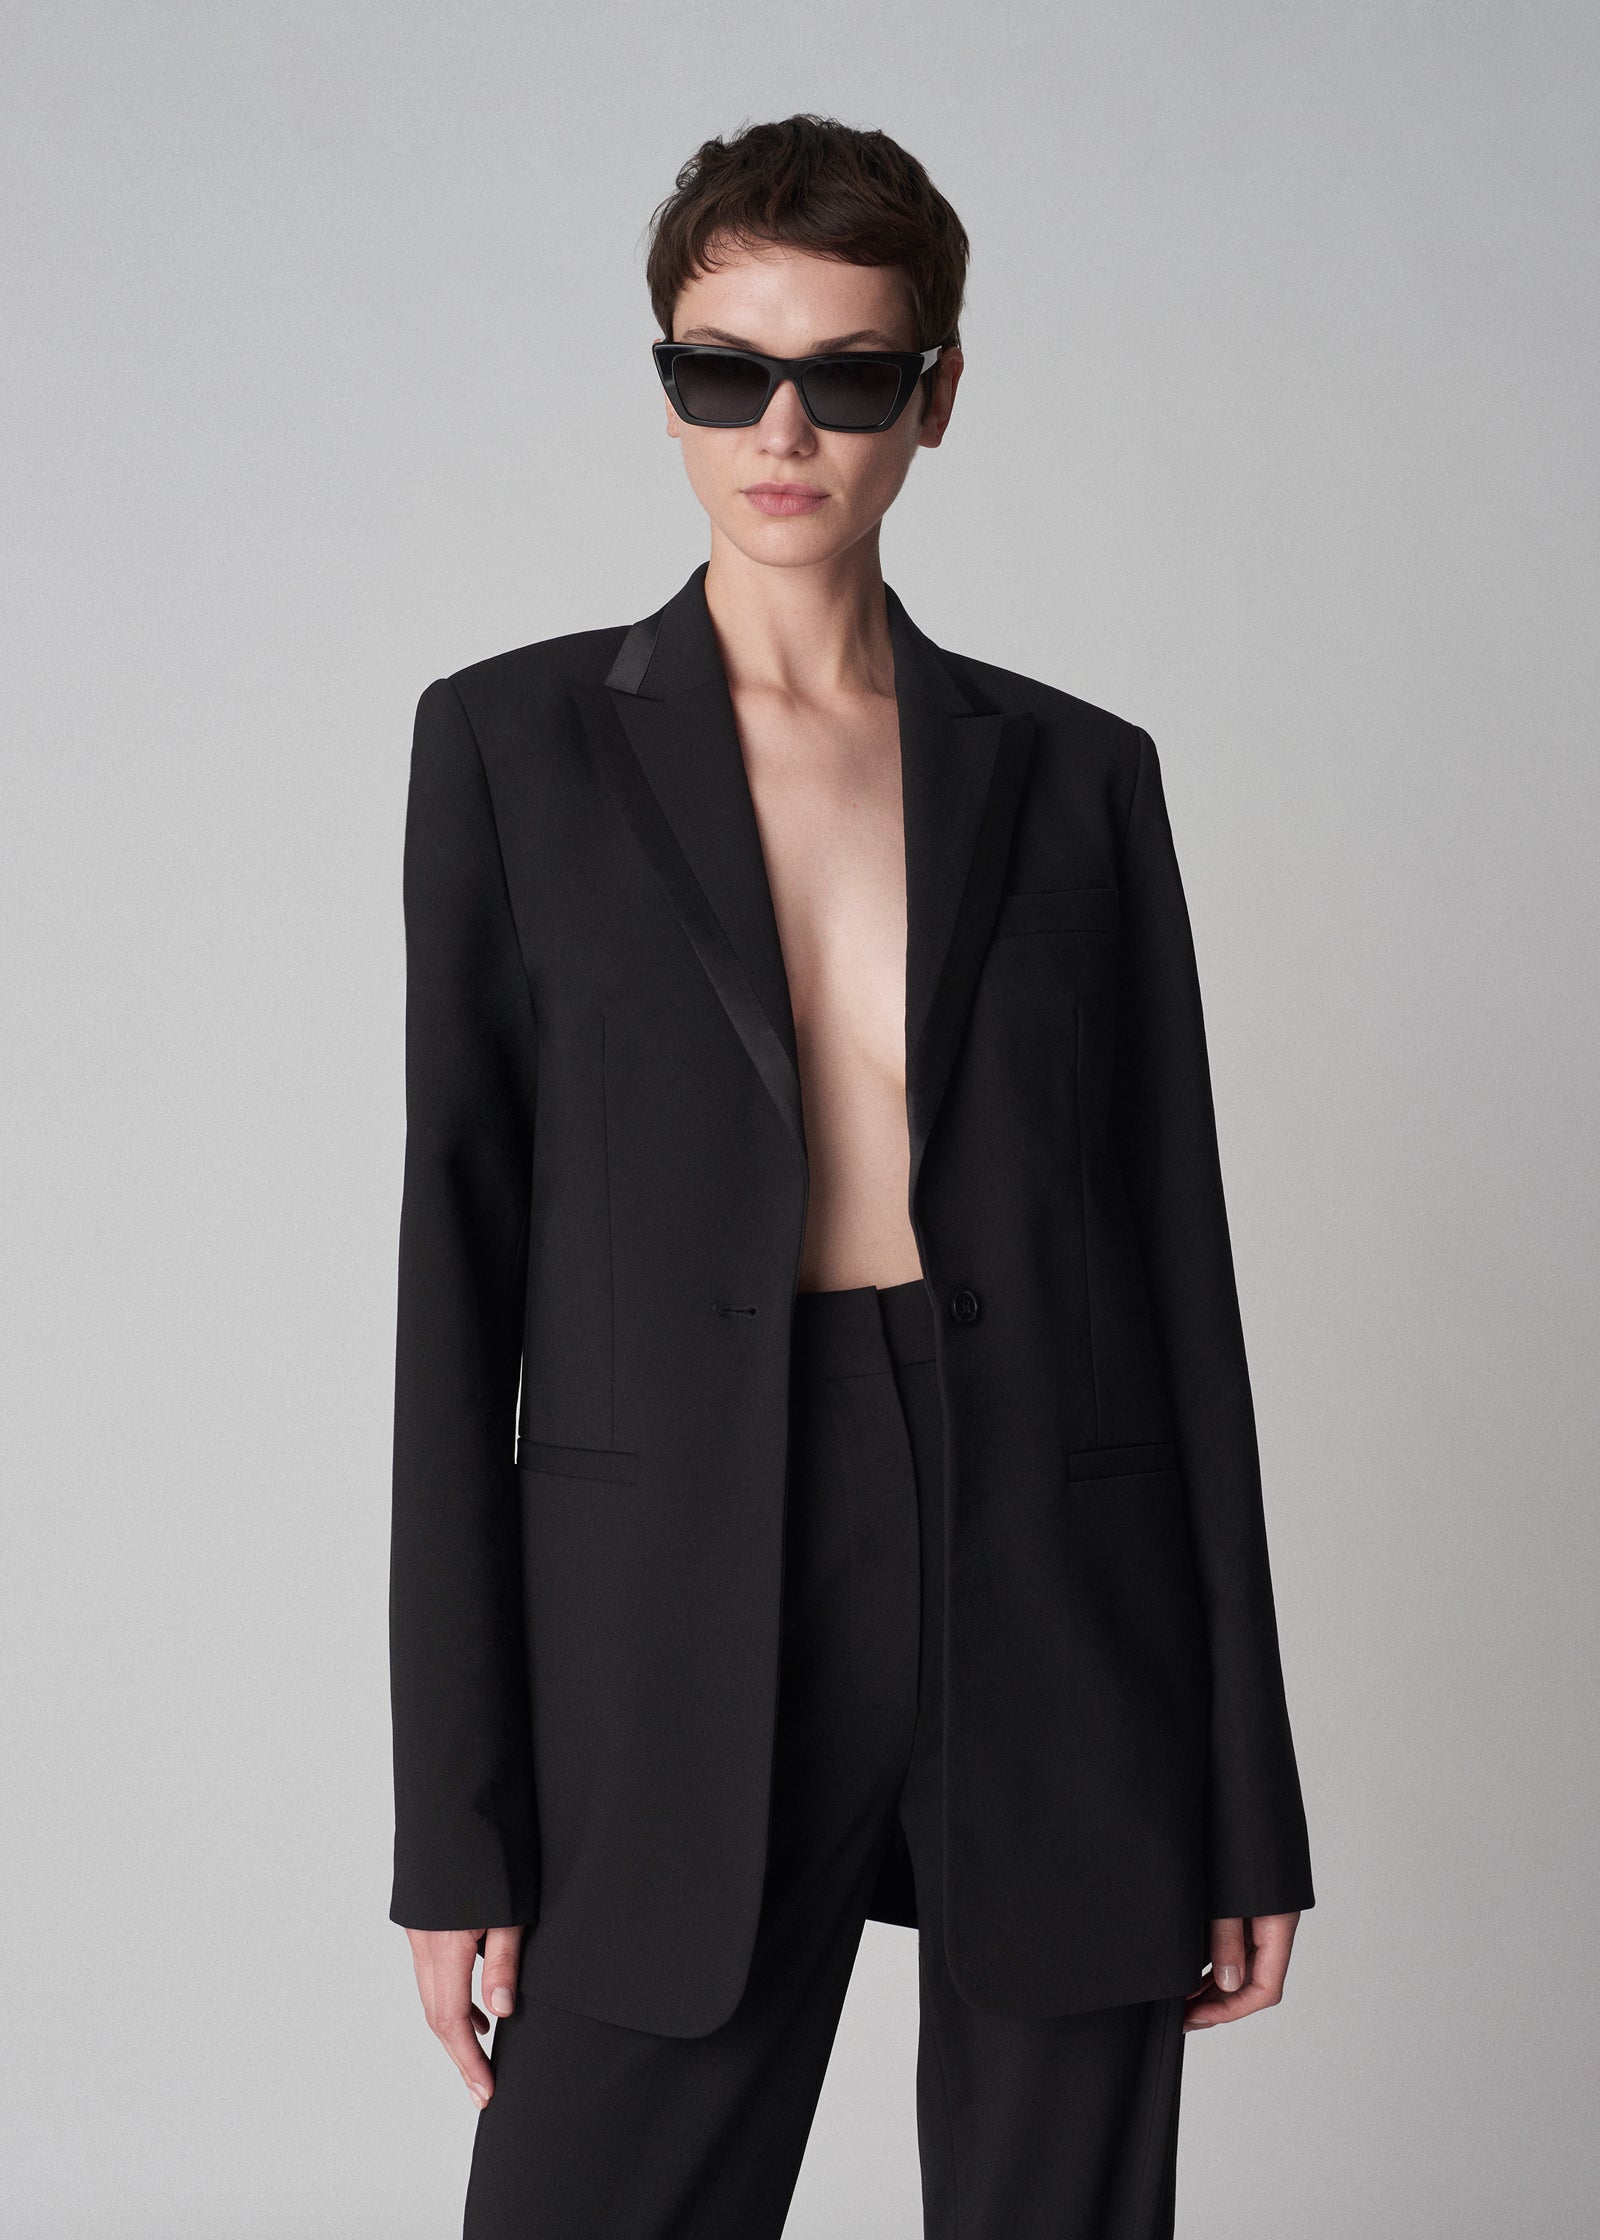 Buy MENVIO Men's Waistcoat Black Half Latest Sleeveless V Neck Slim Jacket  Formal Casual Stylish Coat for Wedding Party Festive Office Wear (Standard,  36, Black) at Amazon.in